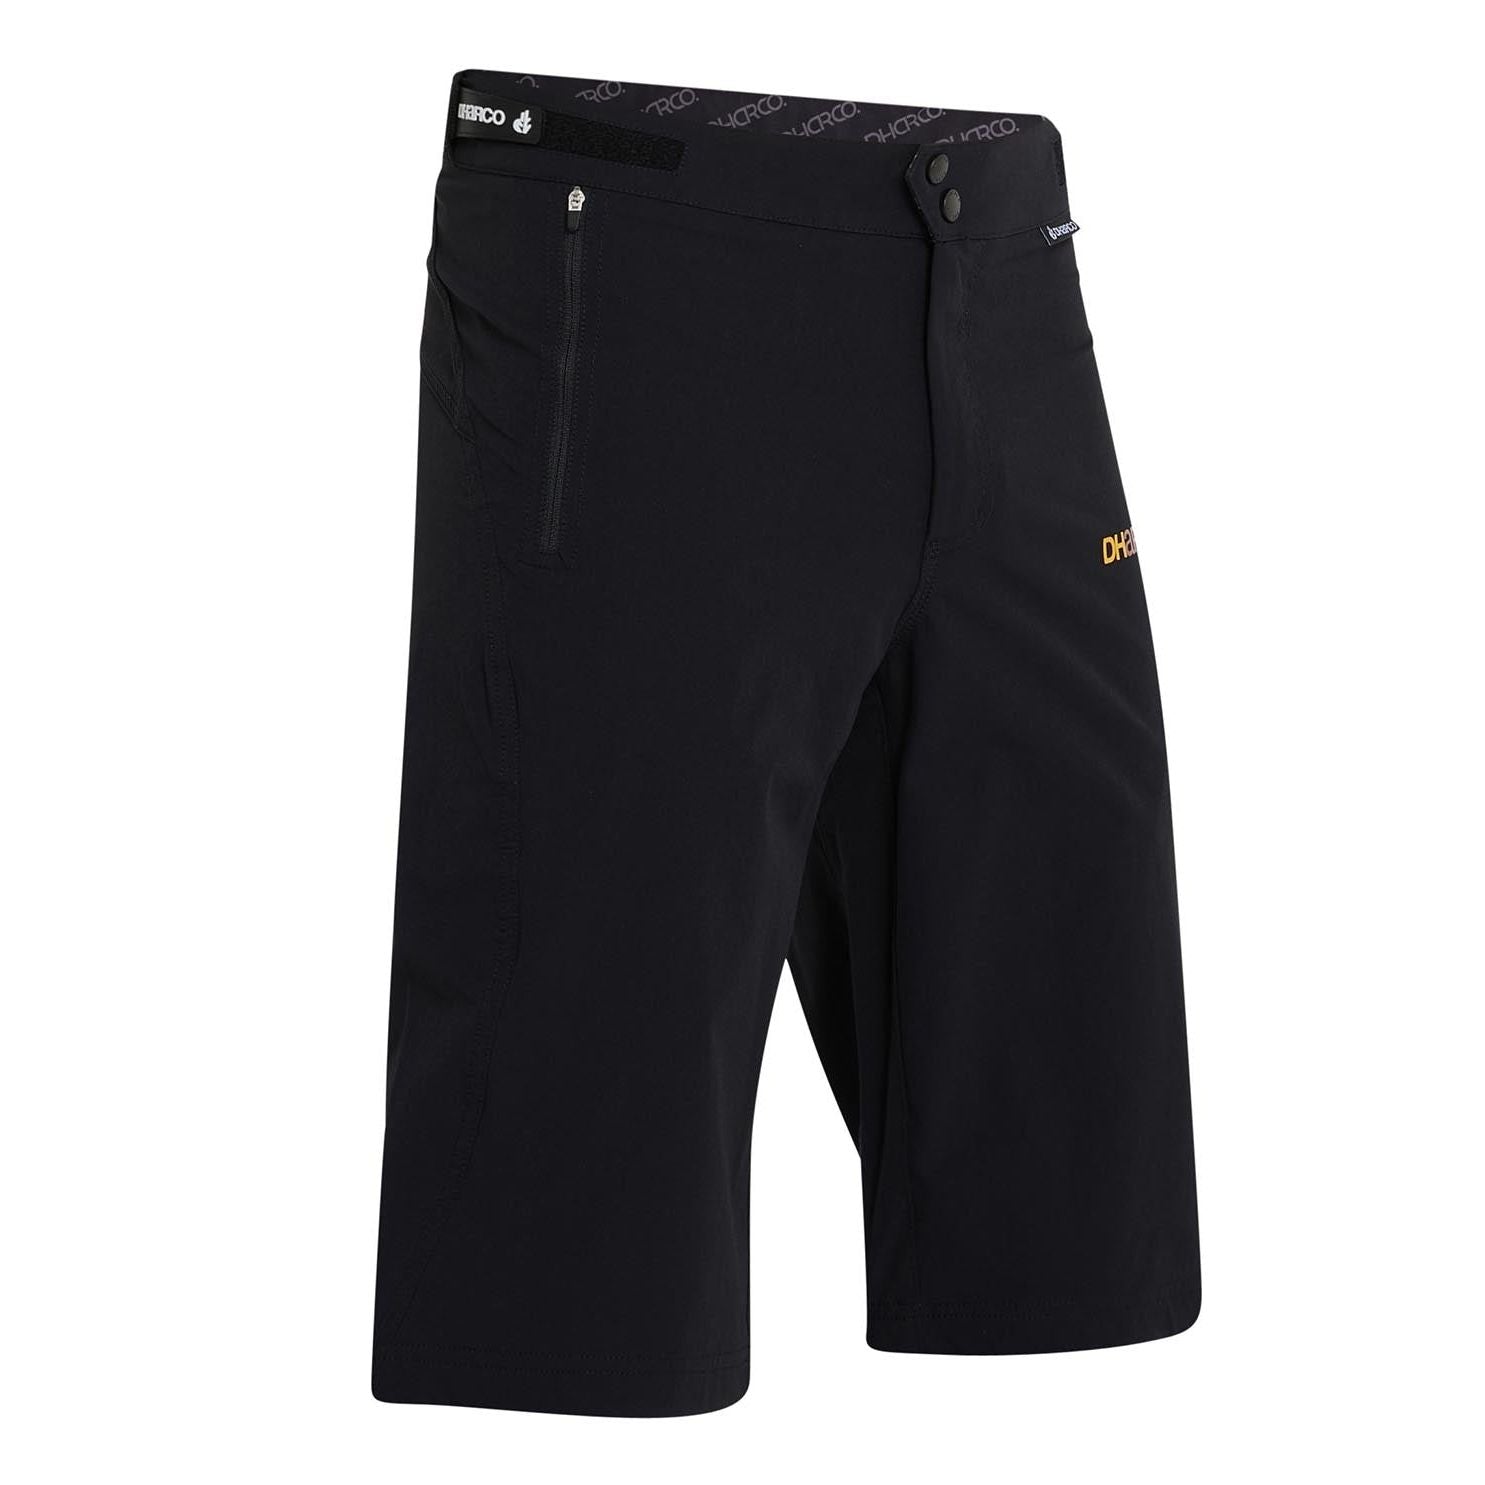 DHaRCO Shorts - MTB Direct Australia